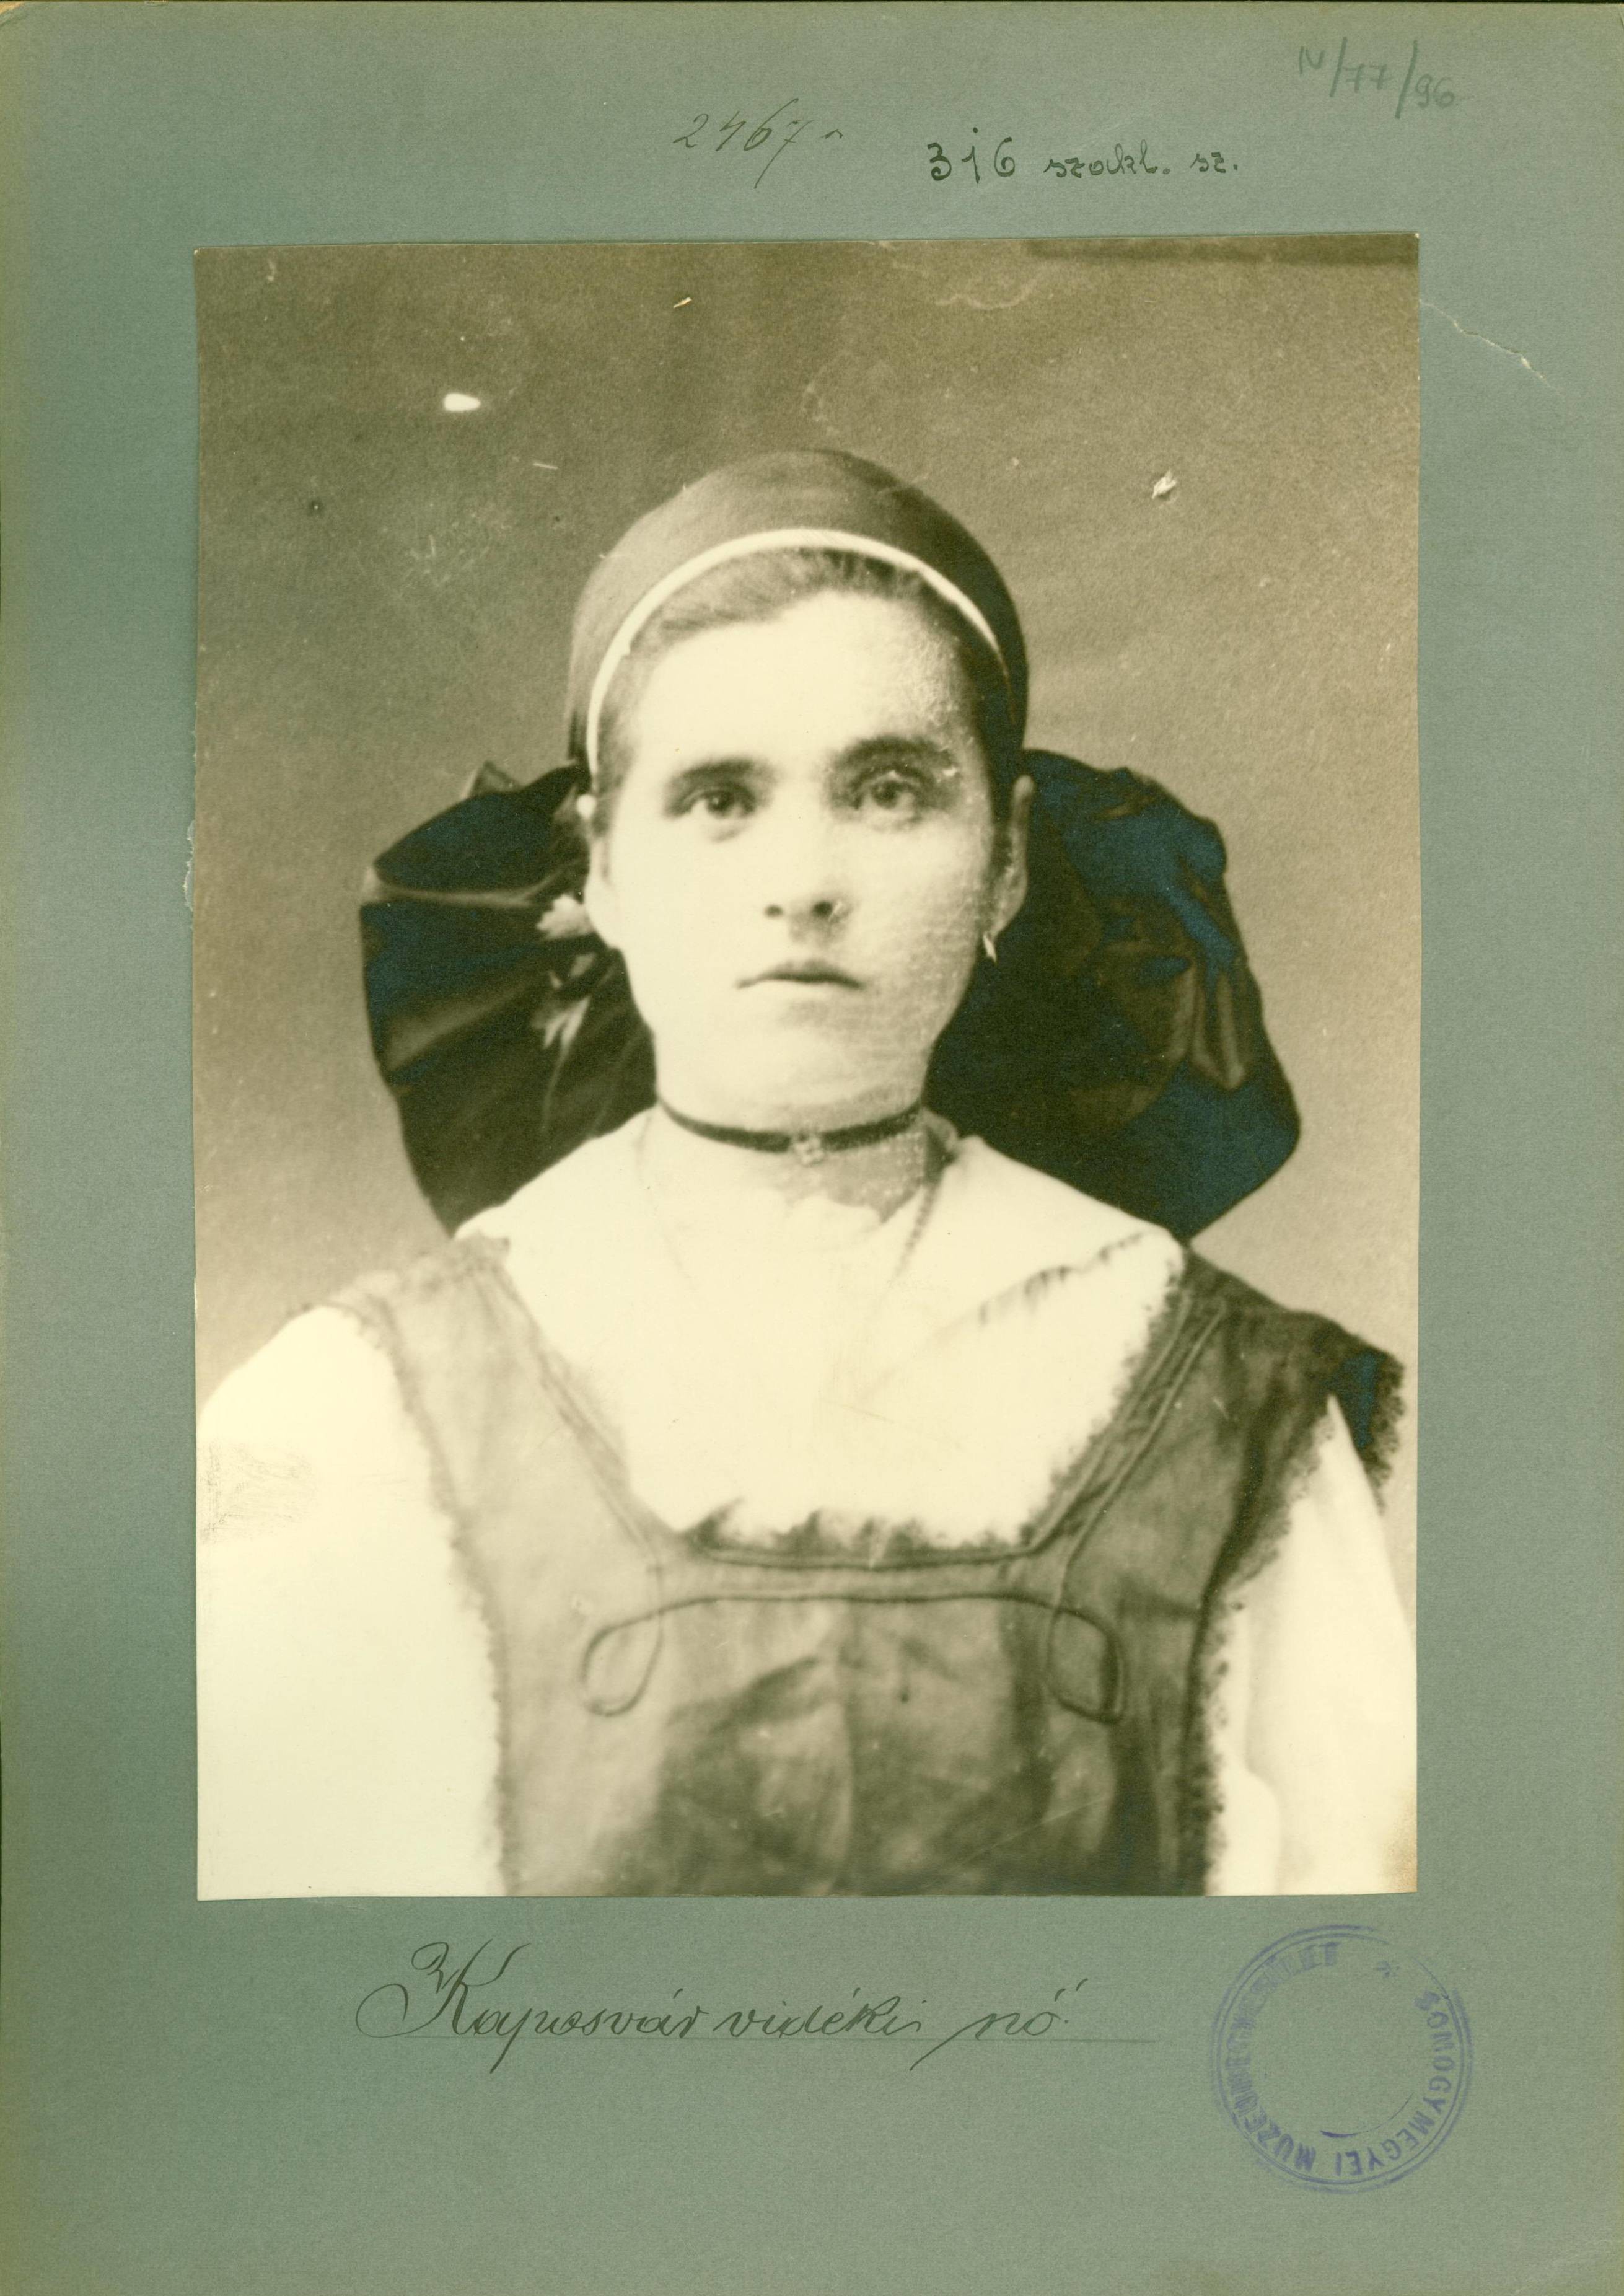 Kaposvár vidéki nő (Rippl-Rónai Múzeum RR-F)